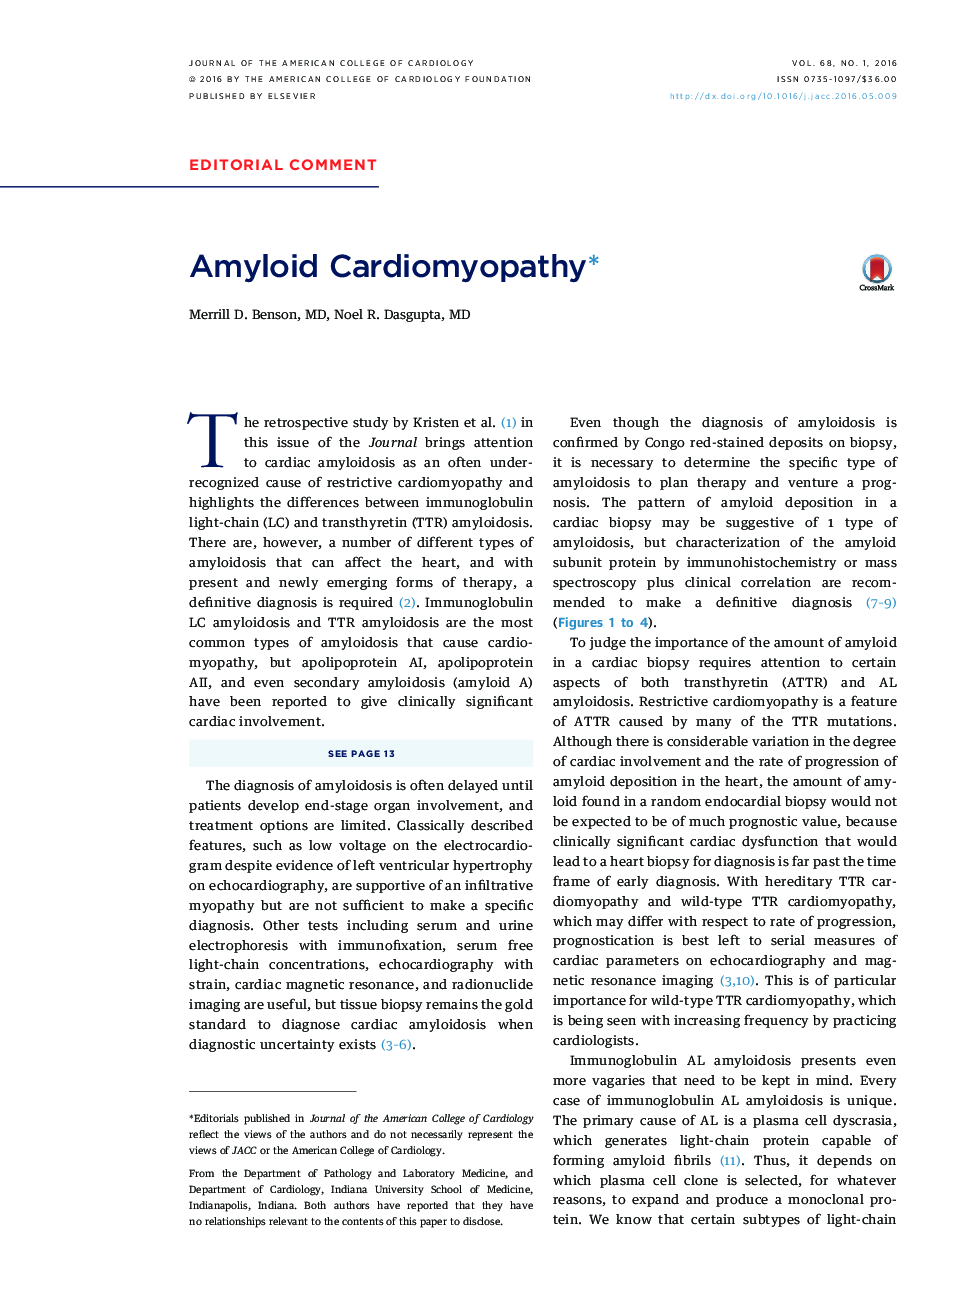 Amyloid Cardiomyopathyâ